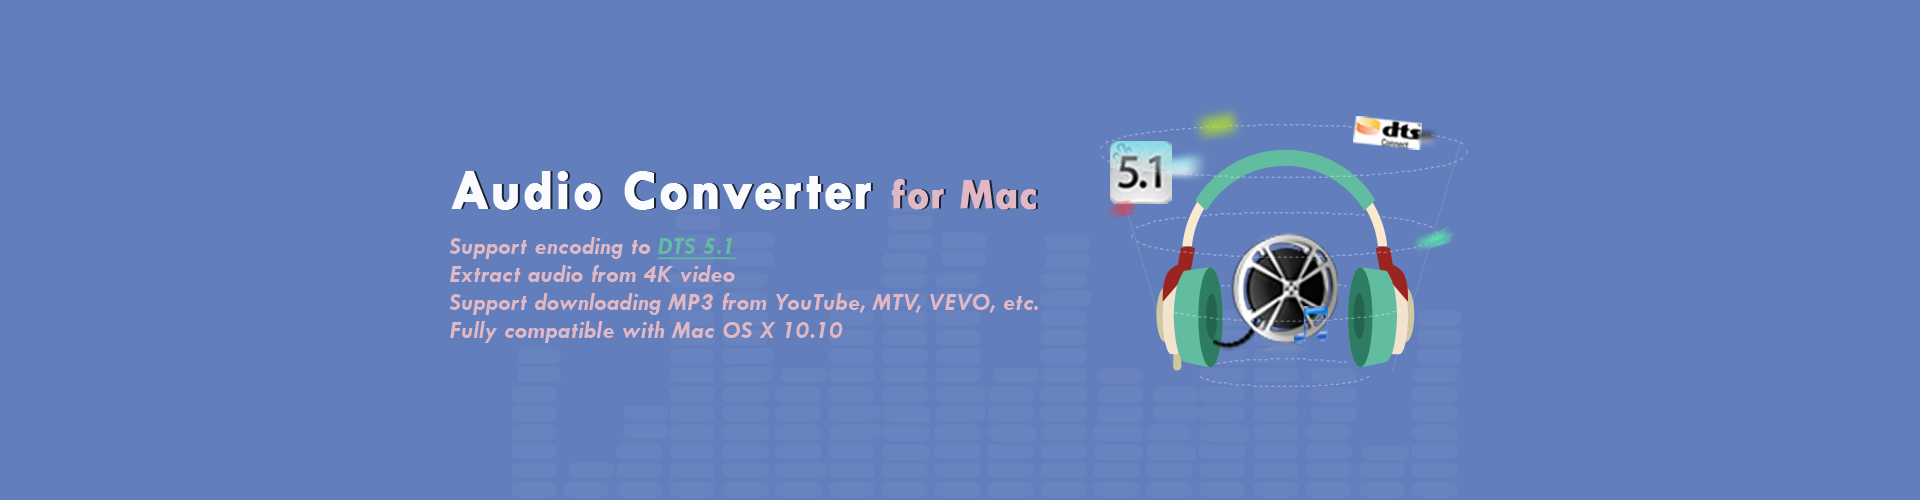 youtube audio converter for mac